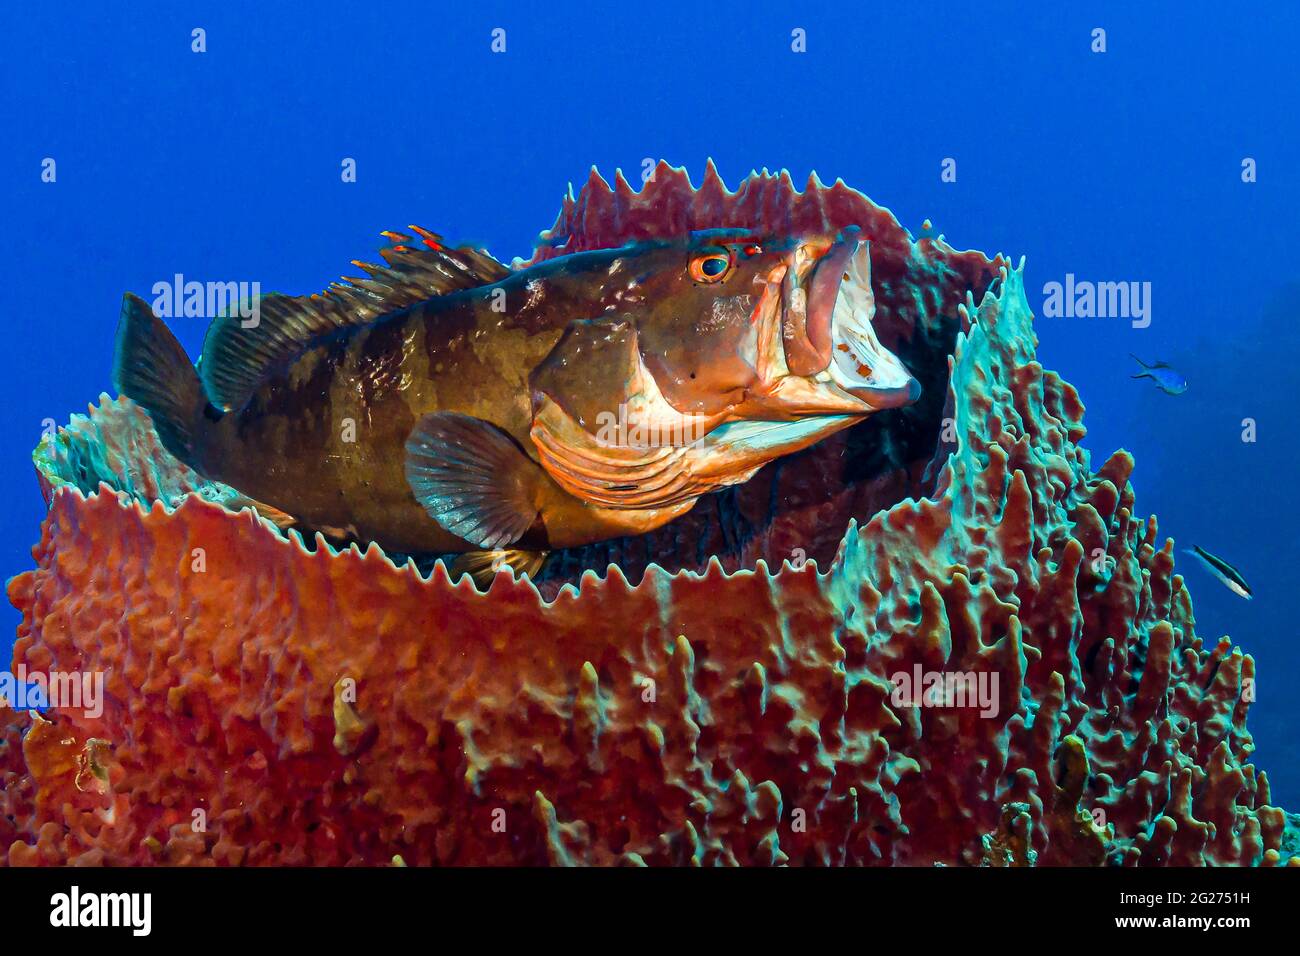 Yawning red grouper in a barrel sponge, Little Cayman Island. Stock Photo